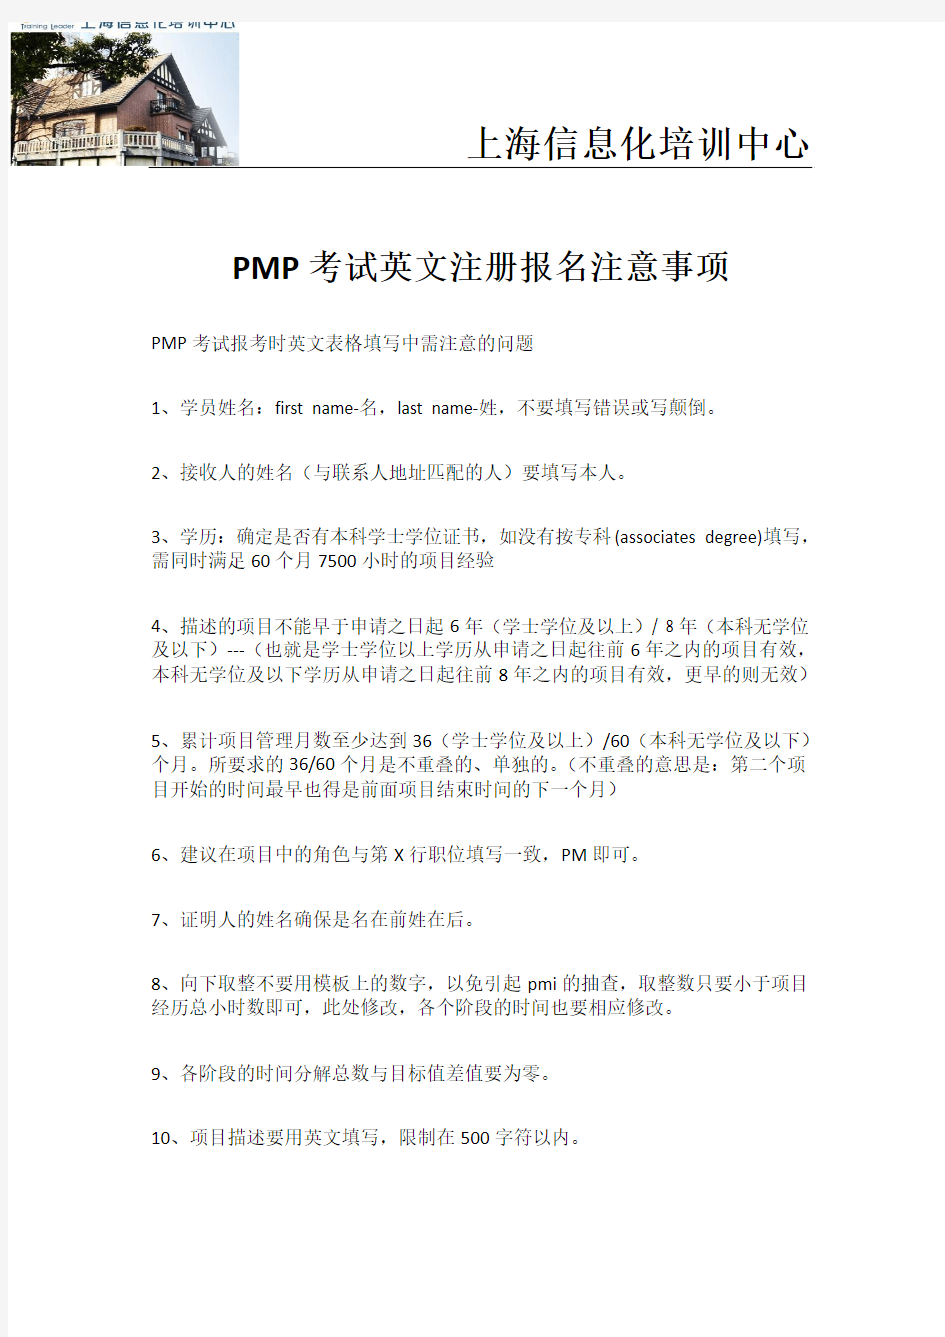 PMP考试英文注册报名注意事项